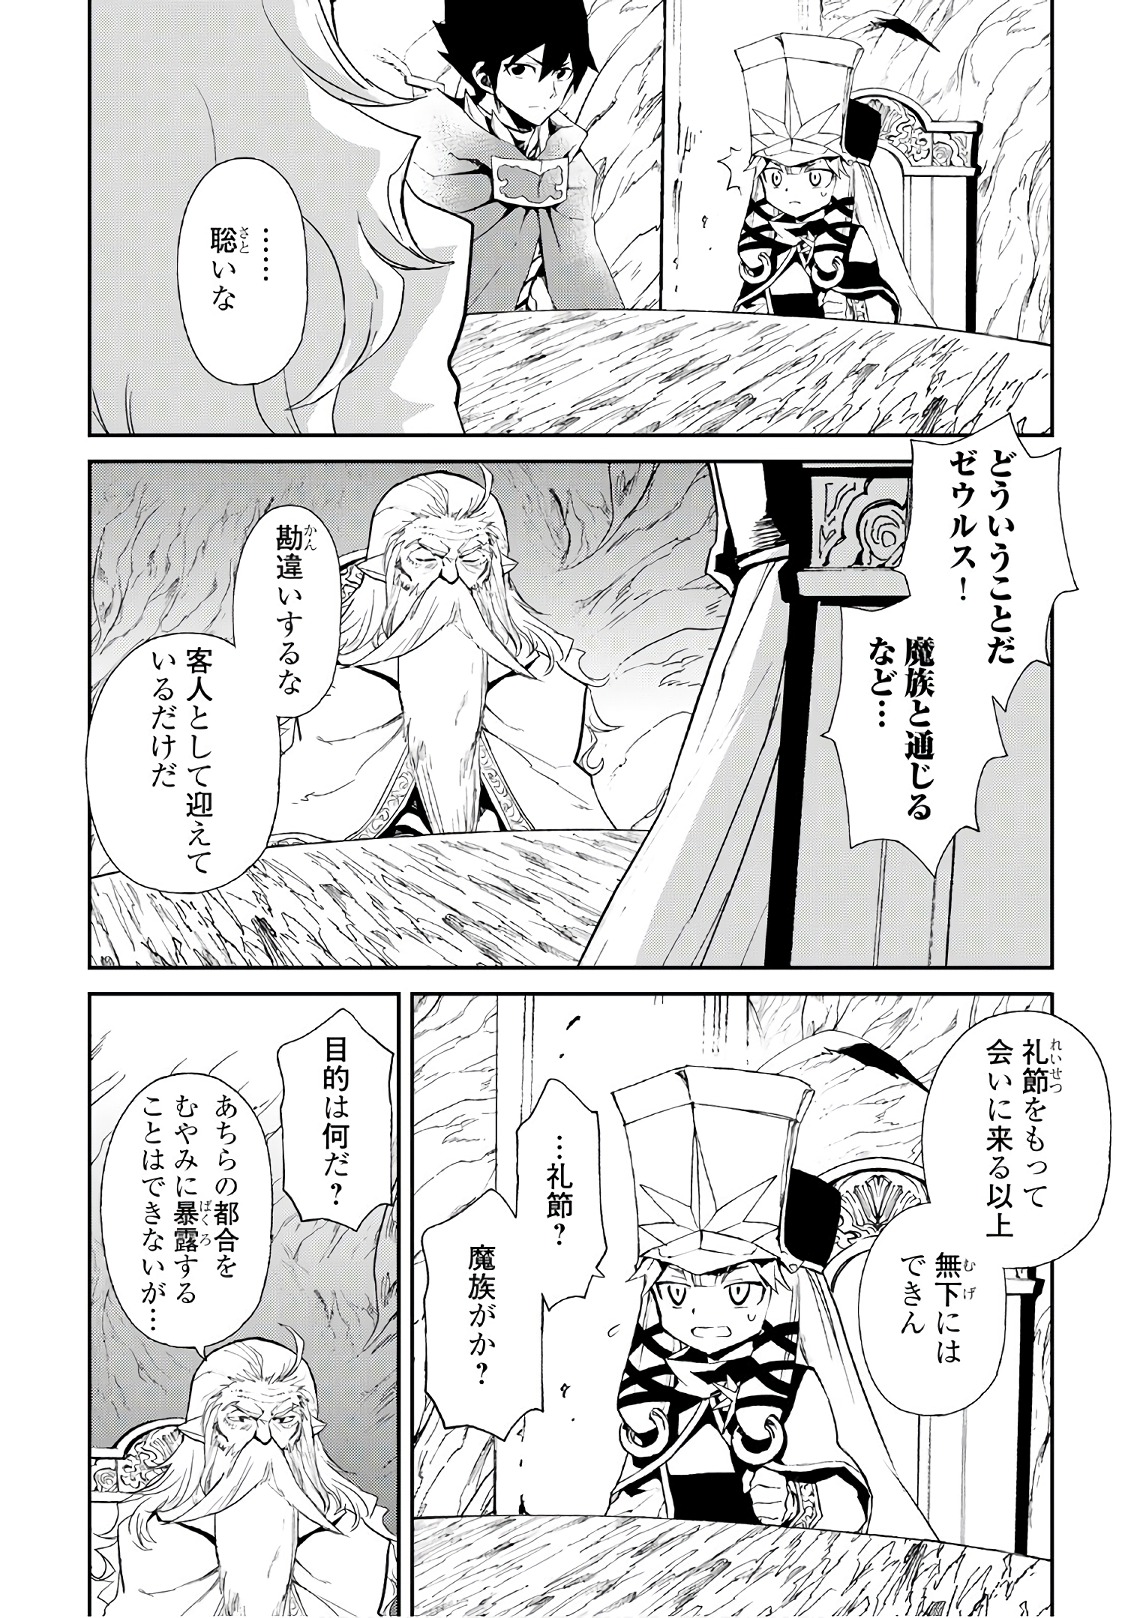 Tsuyokute New Saga - Chapter 49 - Page 2